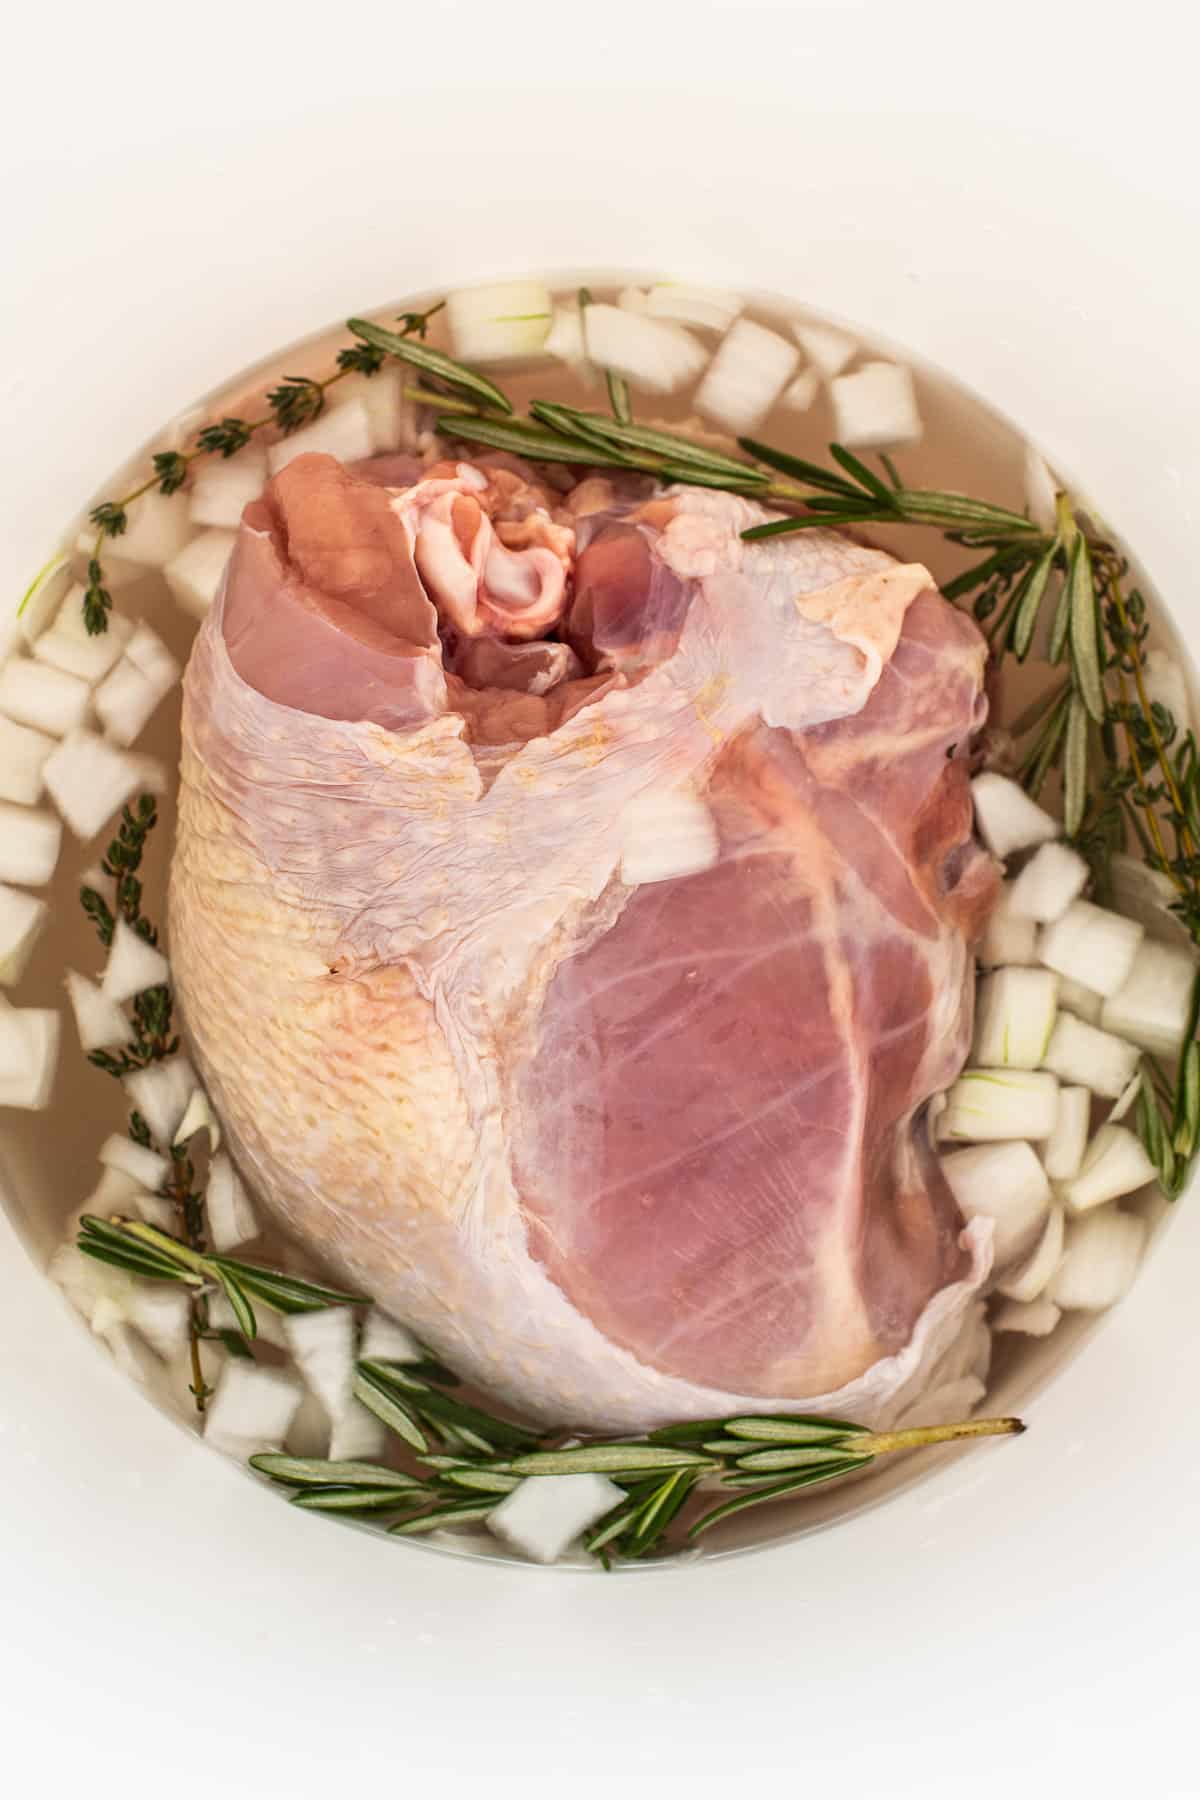 Turkey breast in a smoked turkey brine. 